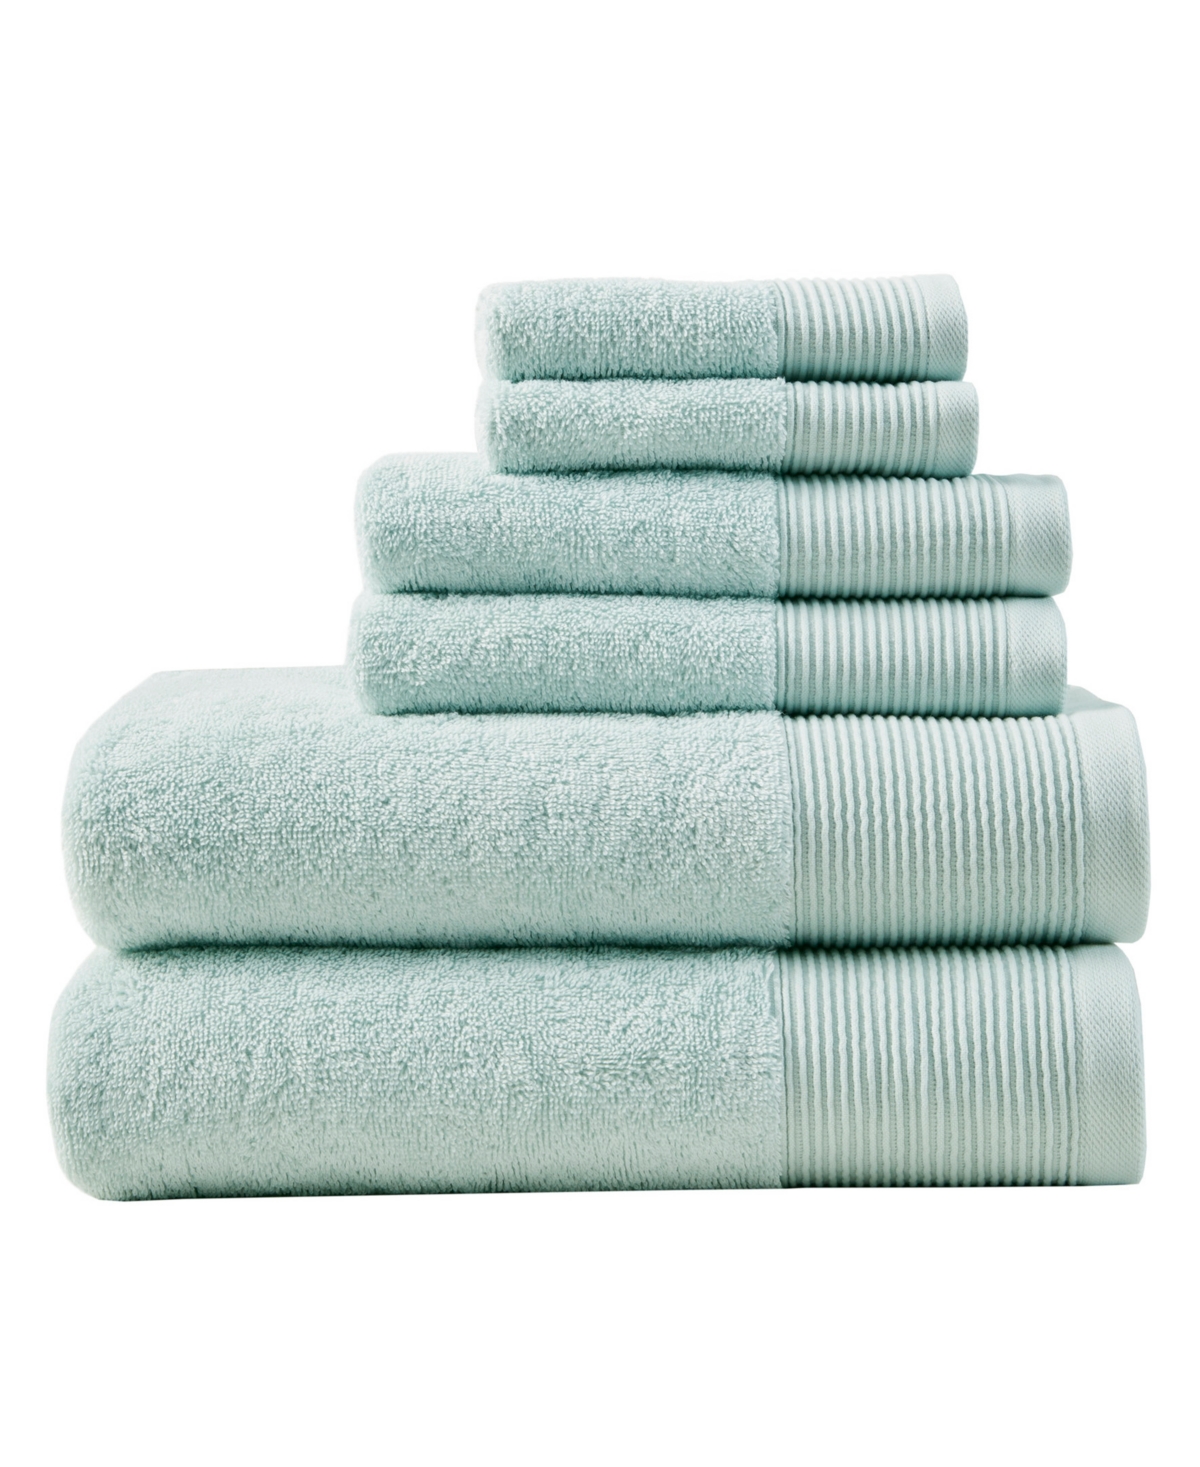 Beautyrest Nuage Cotton Tencel Blend Antimicrobial 6 Piece Towel Set Bedding In Seafoam